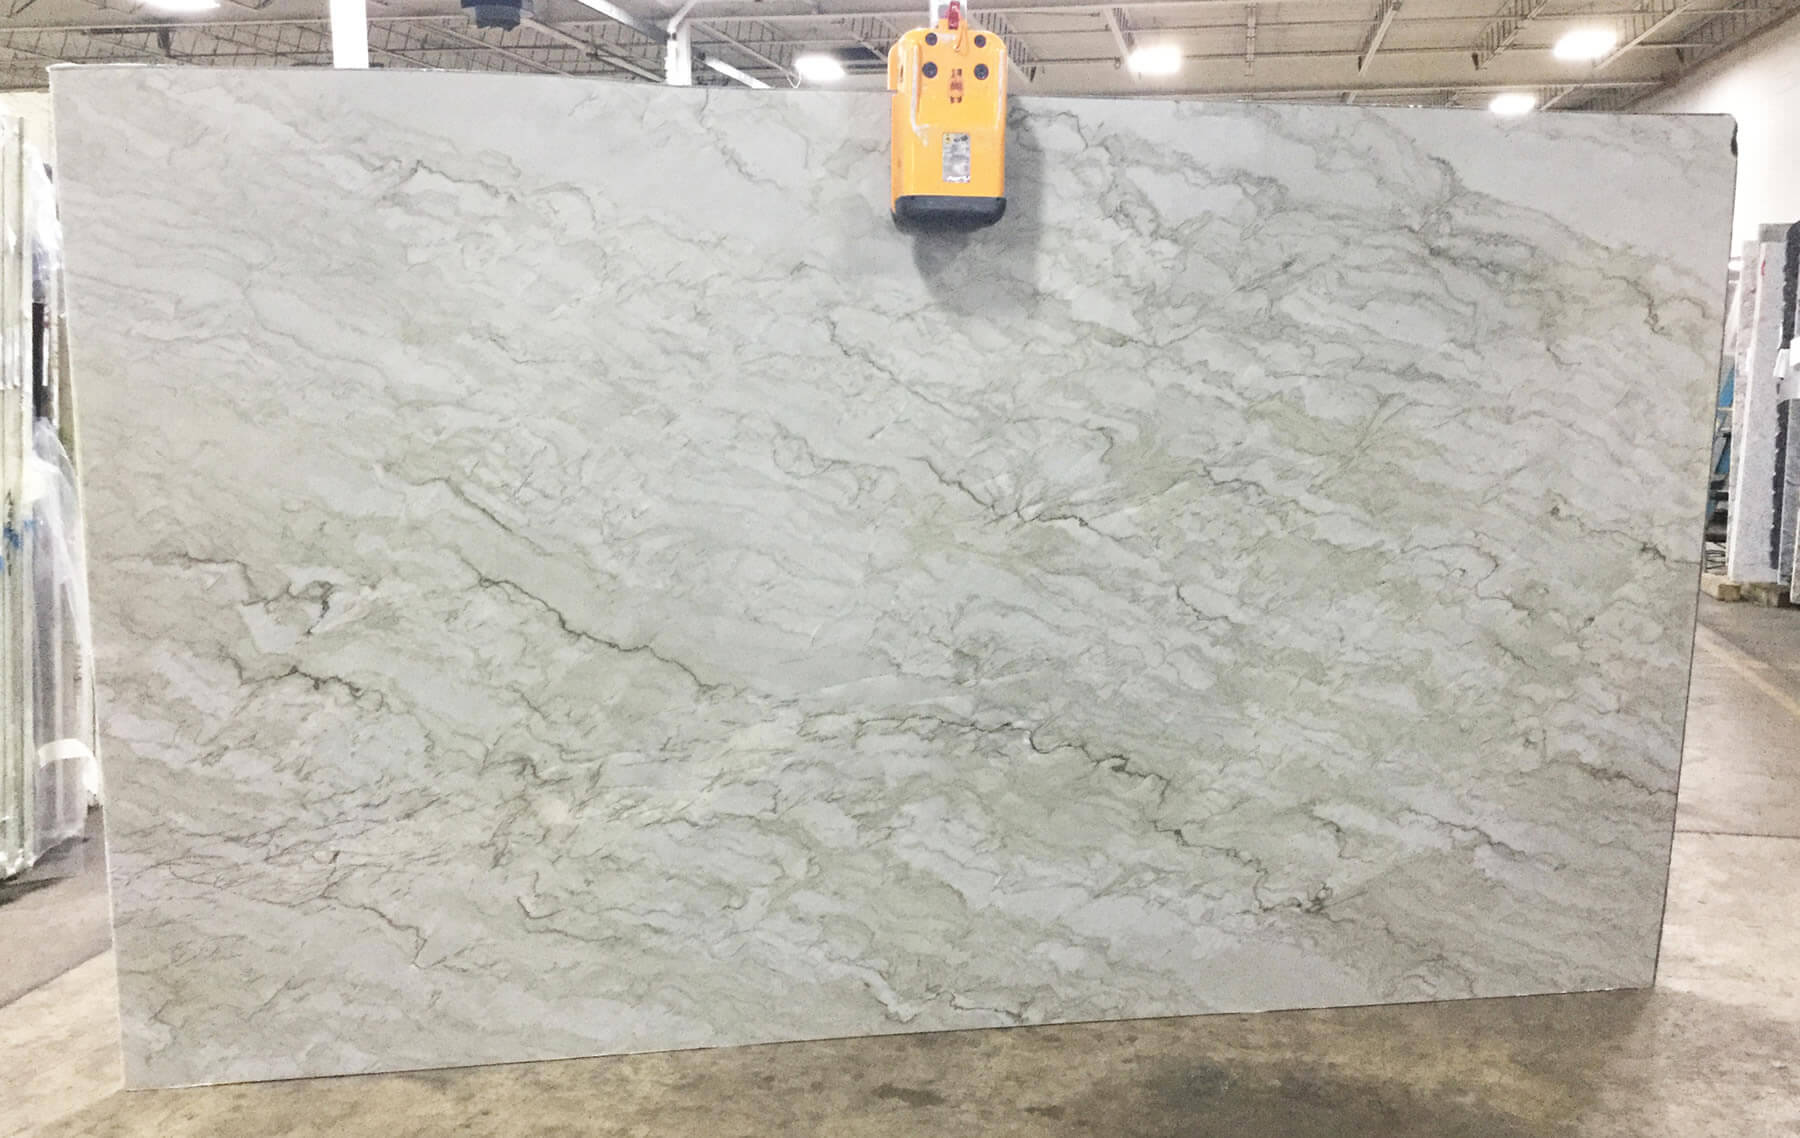 Large slab of silky quartzite countertop.